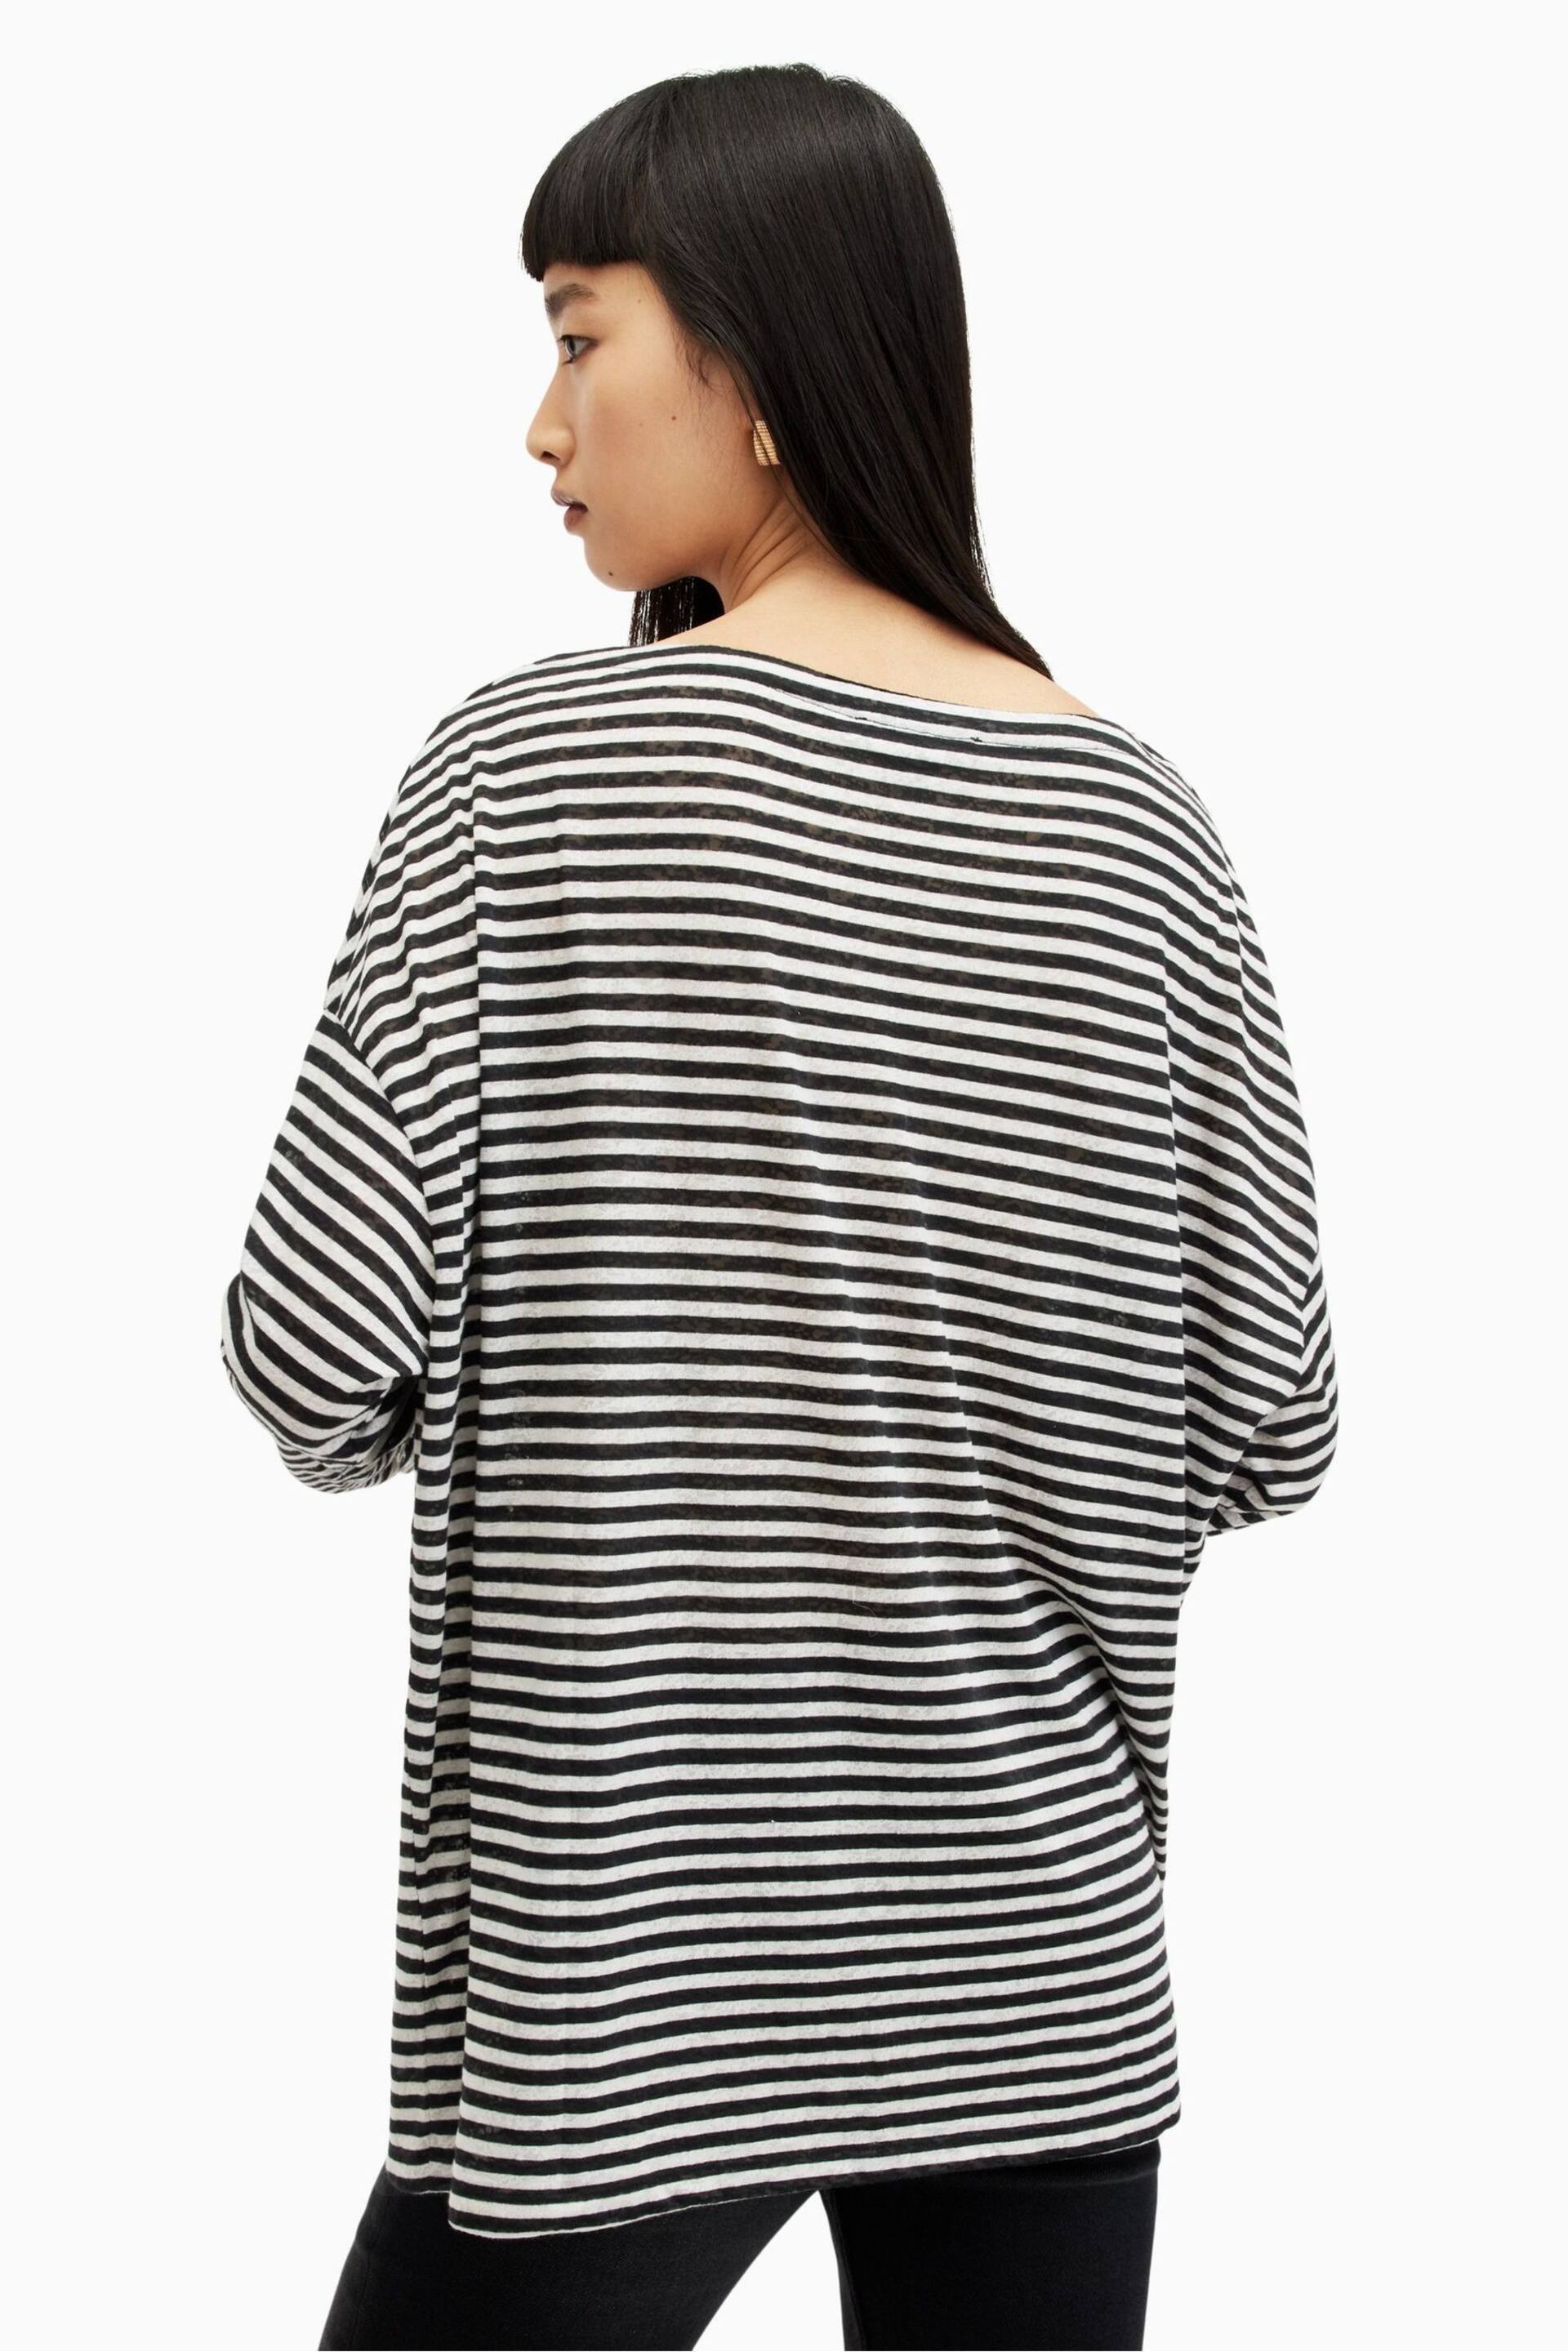 AllSaints Black Stripe Rita T-Shirt - Image 2 of 6